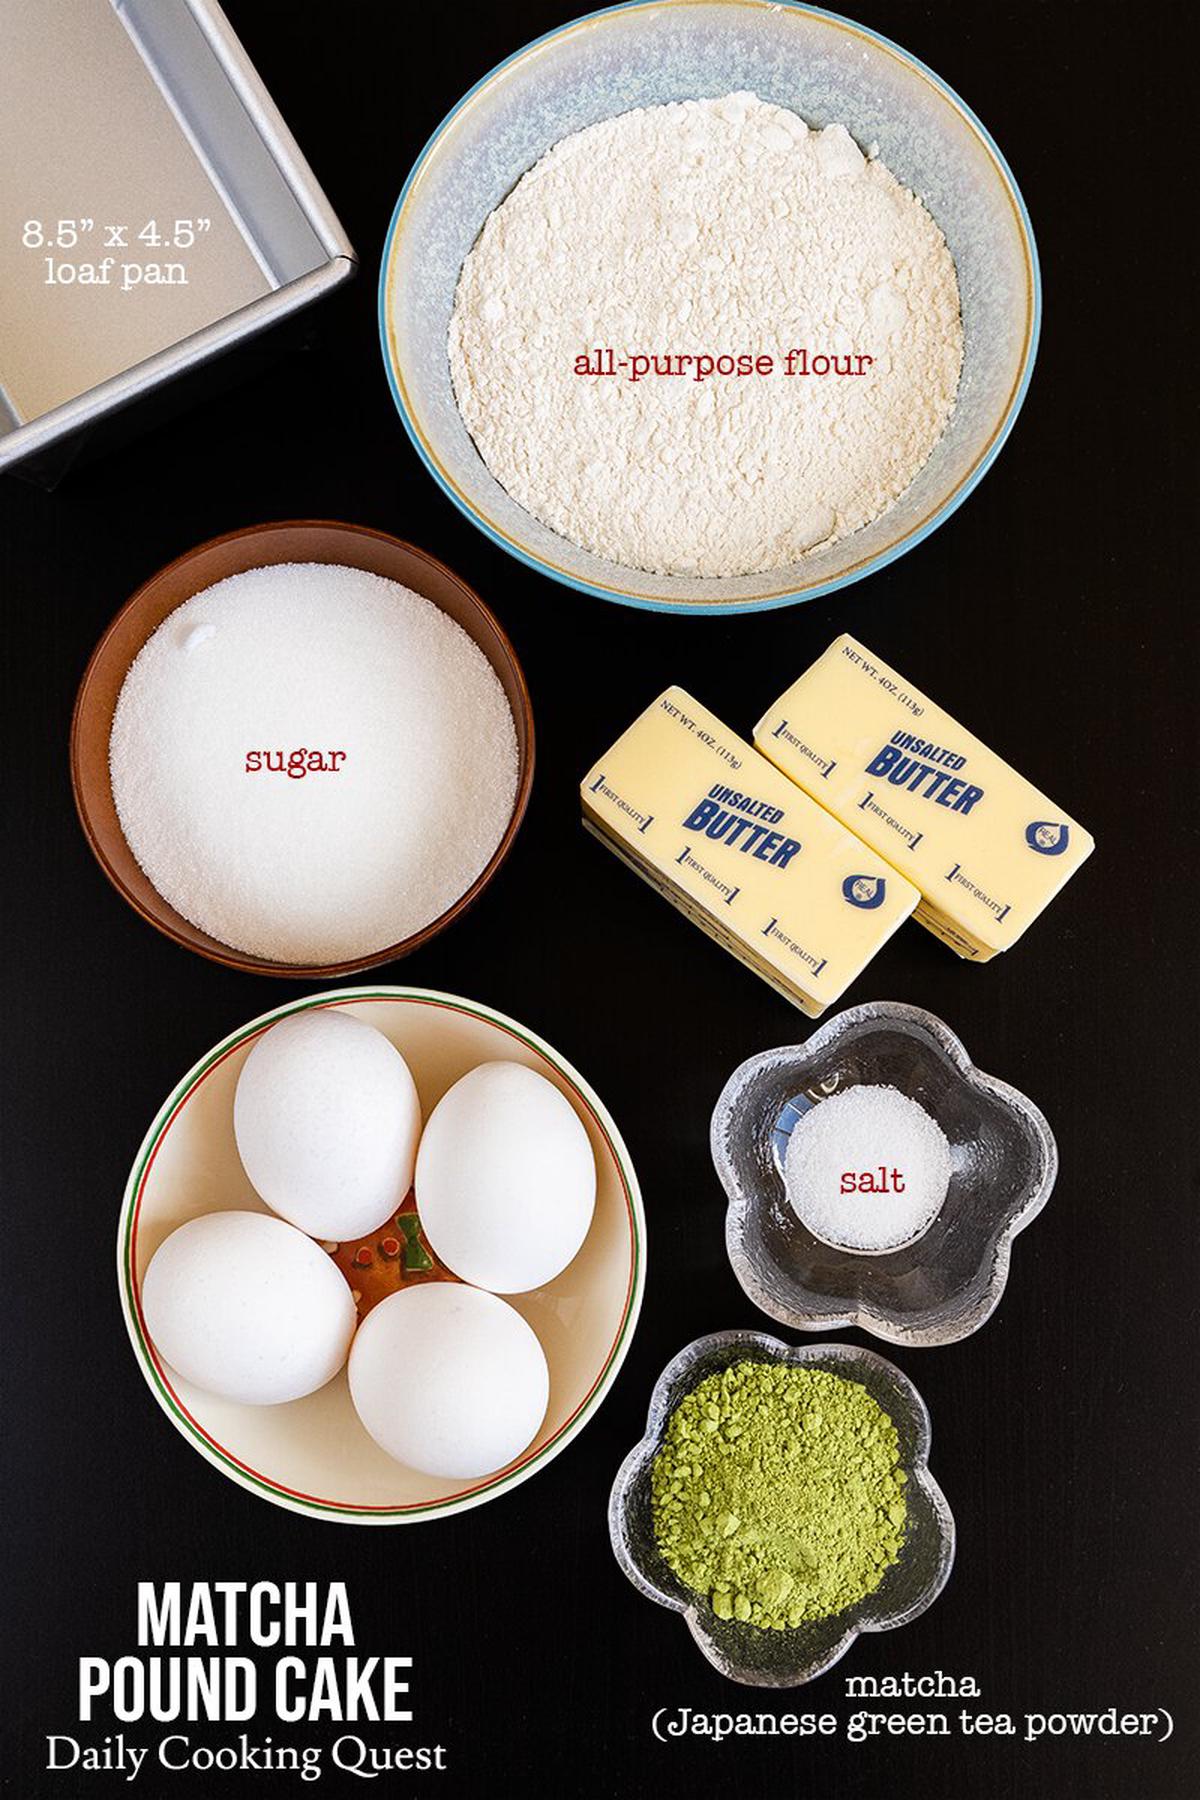 Ingredients to bake a matcha pound cake: all-purpose flour, butter, sugar, eggs, salt, and matcha (Japanese green tea powder).